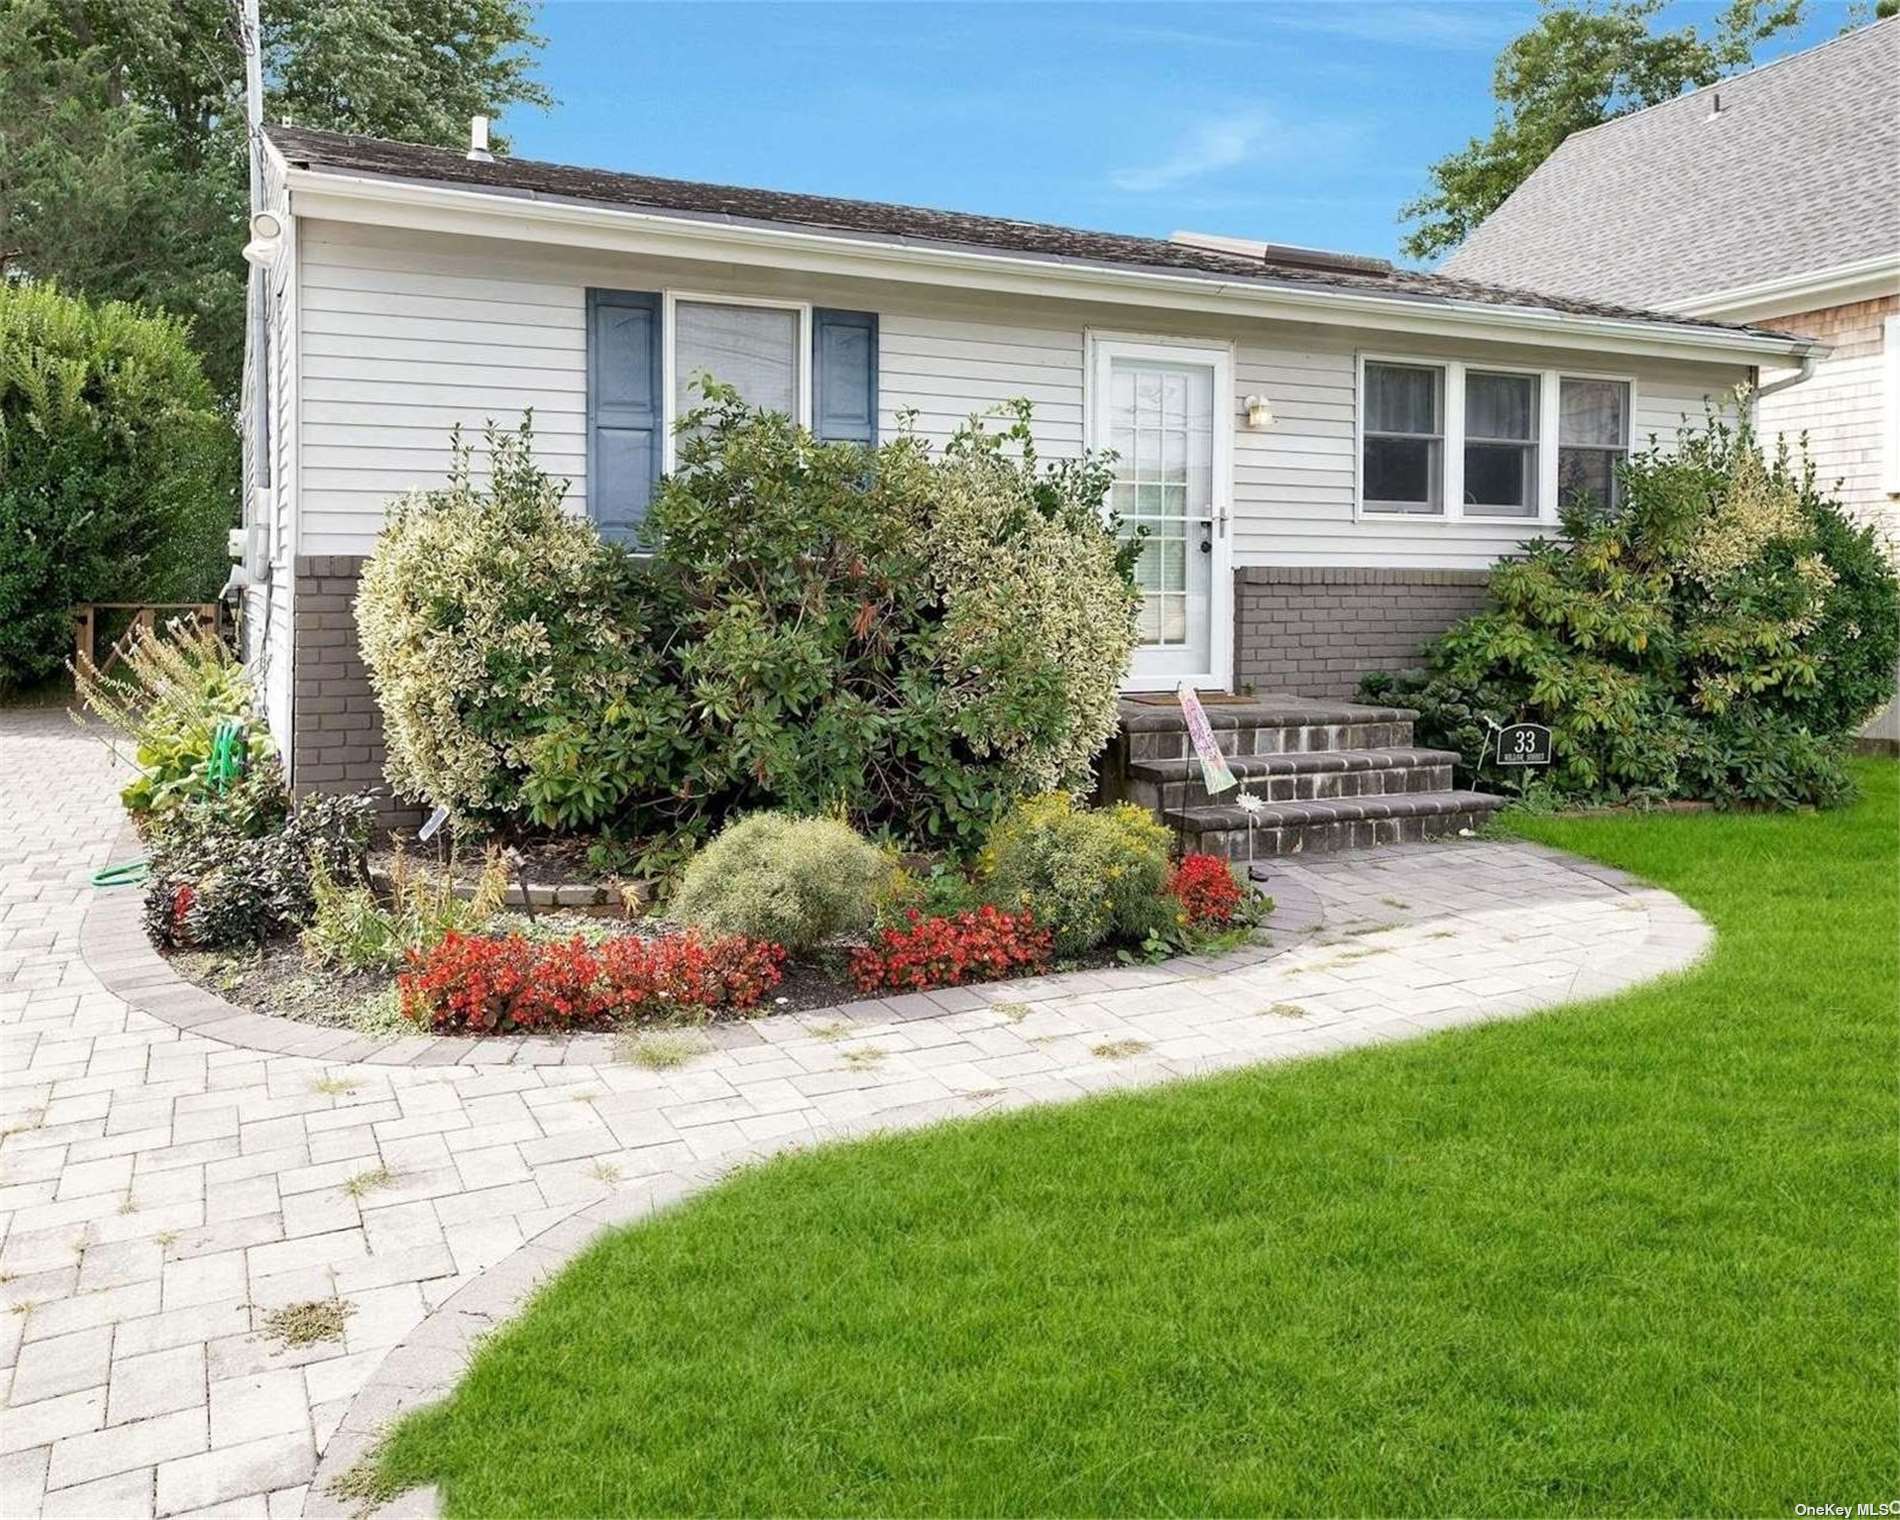 Property for Sale at 33 Willow Street, Aquebogue, Hamptons, NY - Bedrooms: 3 
Bathrooms: 2  - $779,000